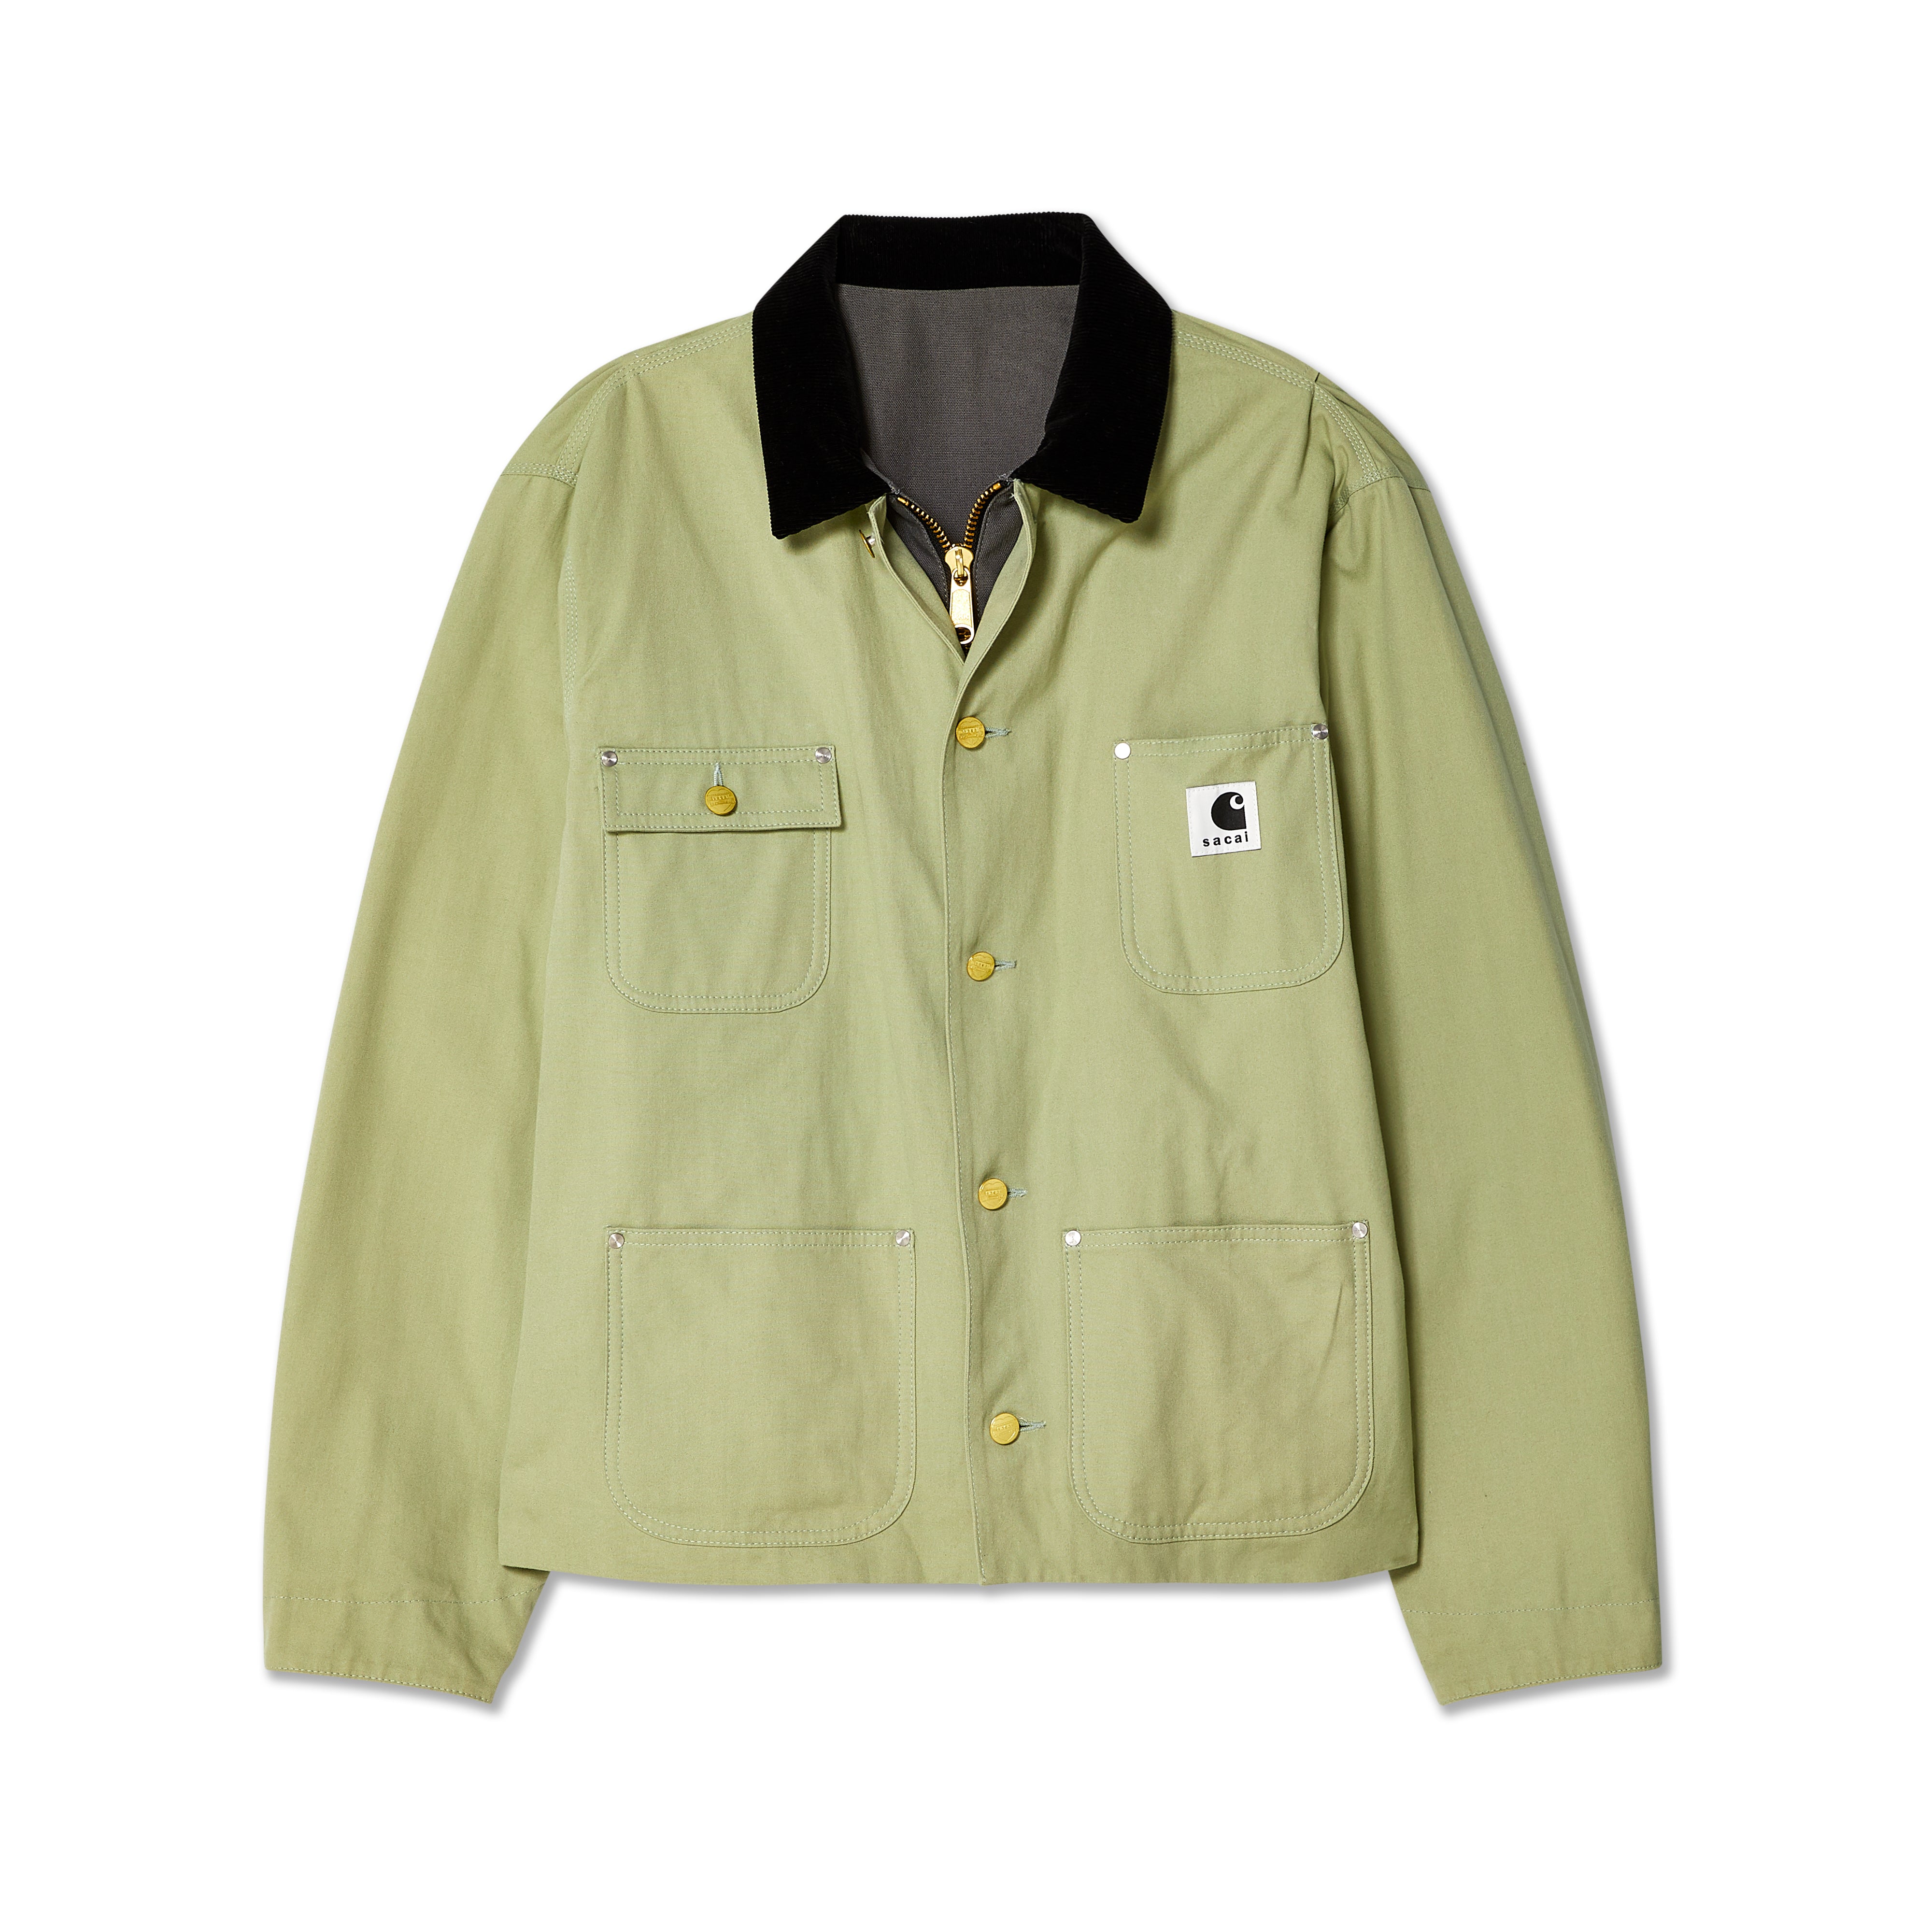 sacai - Carhartt WIP Men's Reversible Jacket - (Grey/Green)